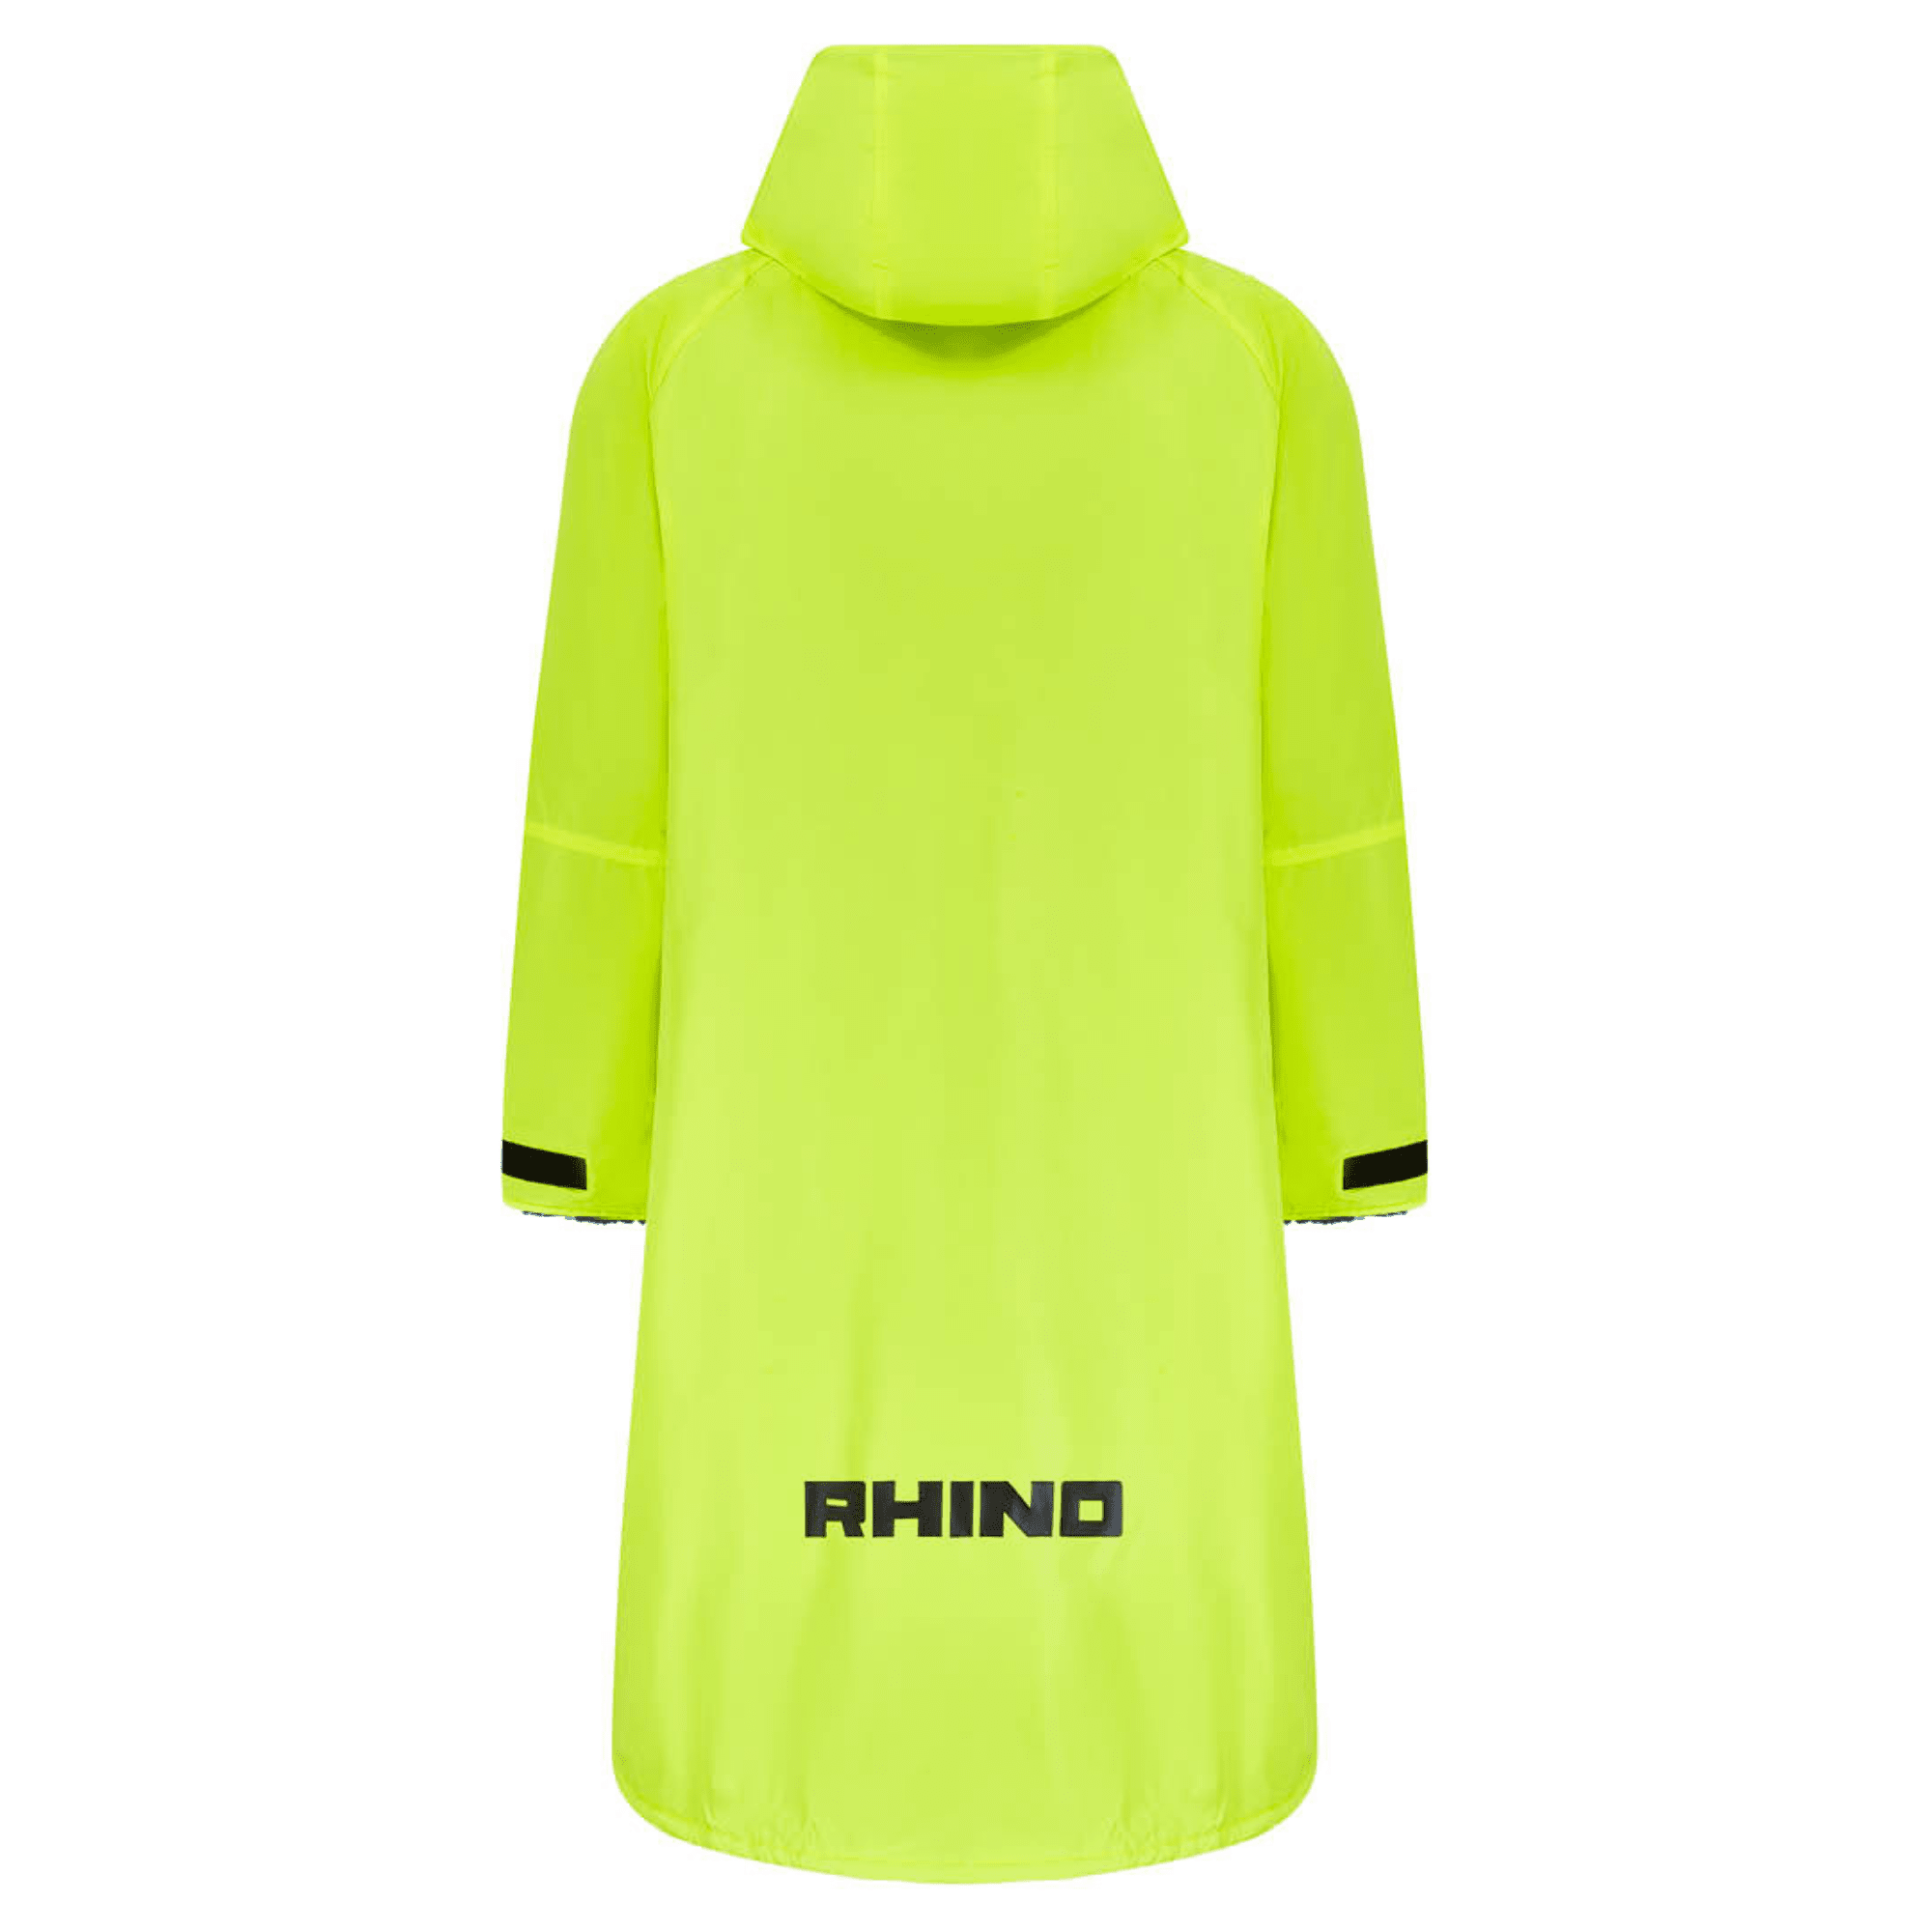 Sherpa Robe Yellow Fleece Inner Lining Waterproof Jacket Keep Dry